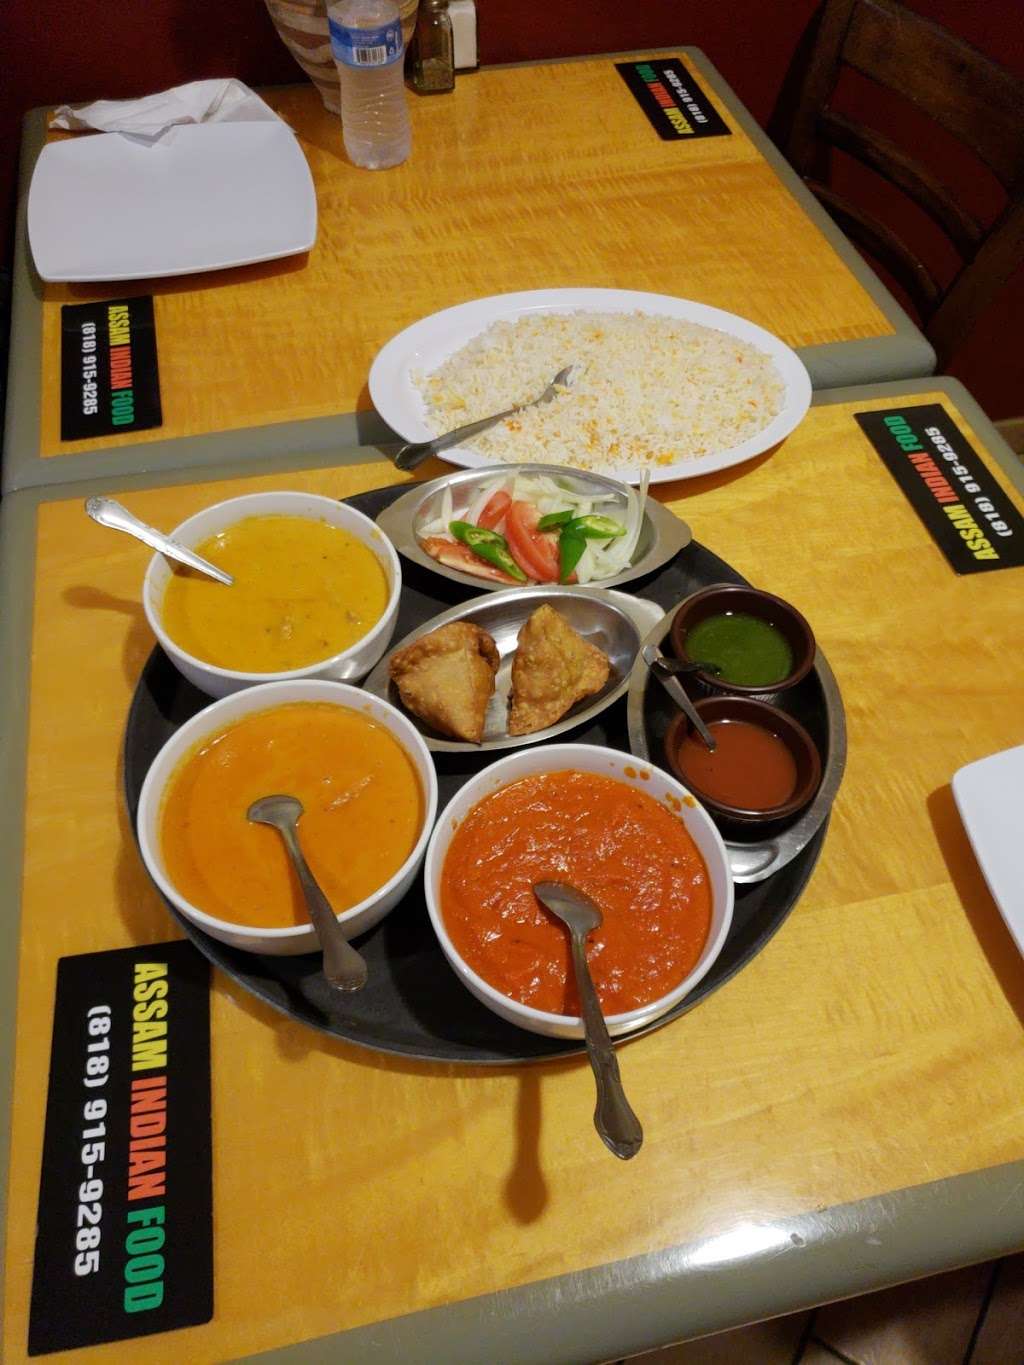 Assam Indian Food | 10719 Burbank Blvd, North Hollywood, CA 91601 | Phone: (818) 915-9285